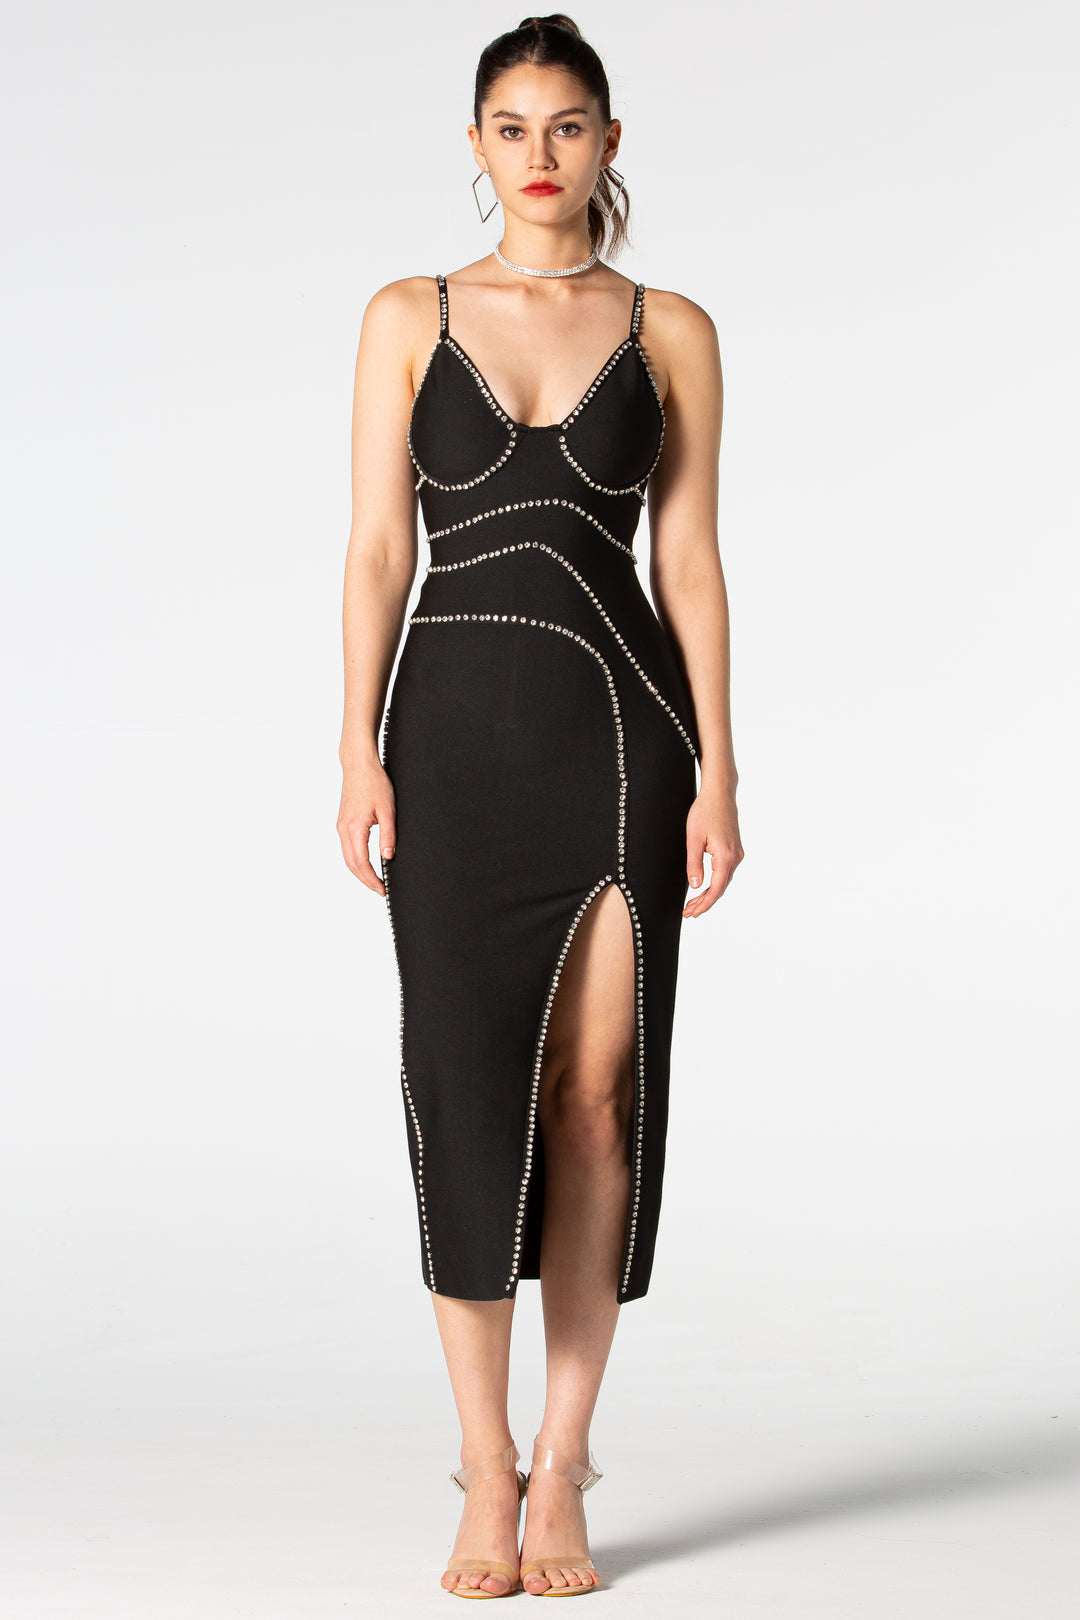 Sesidy-Aarna Rhinestone High Slit Midi Dress-Women's Clothing Online Store